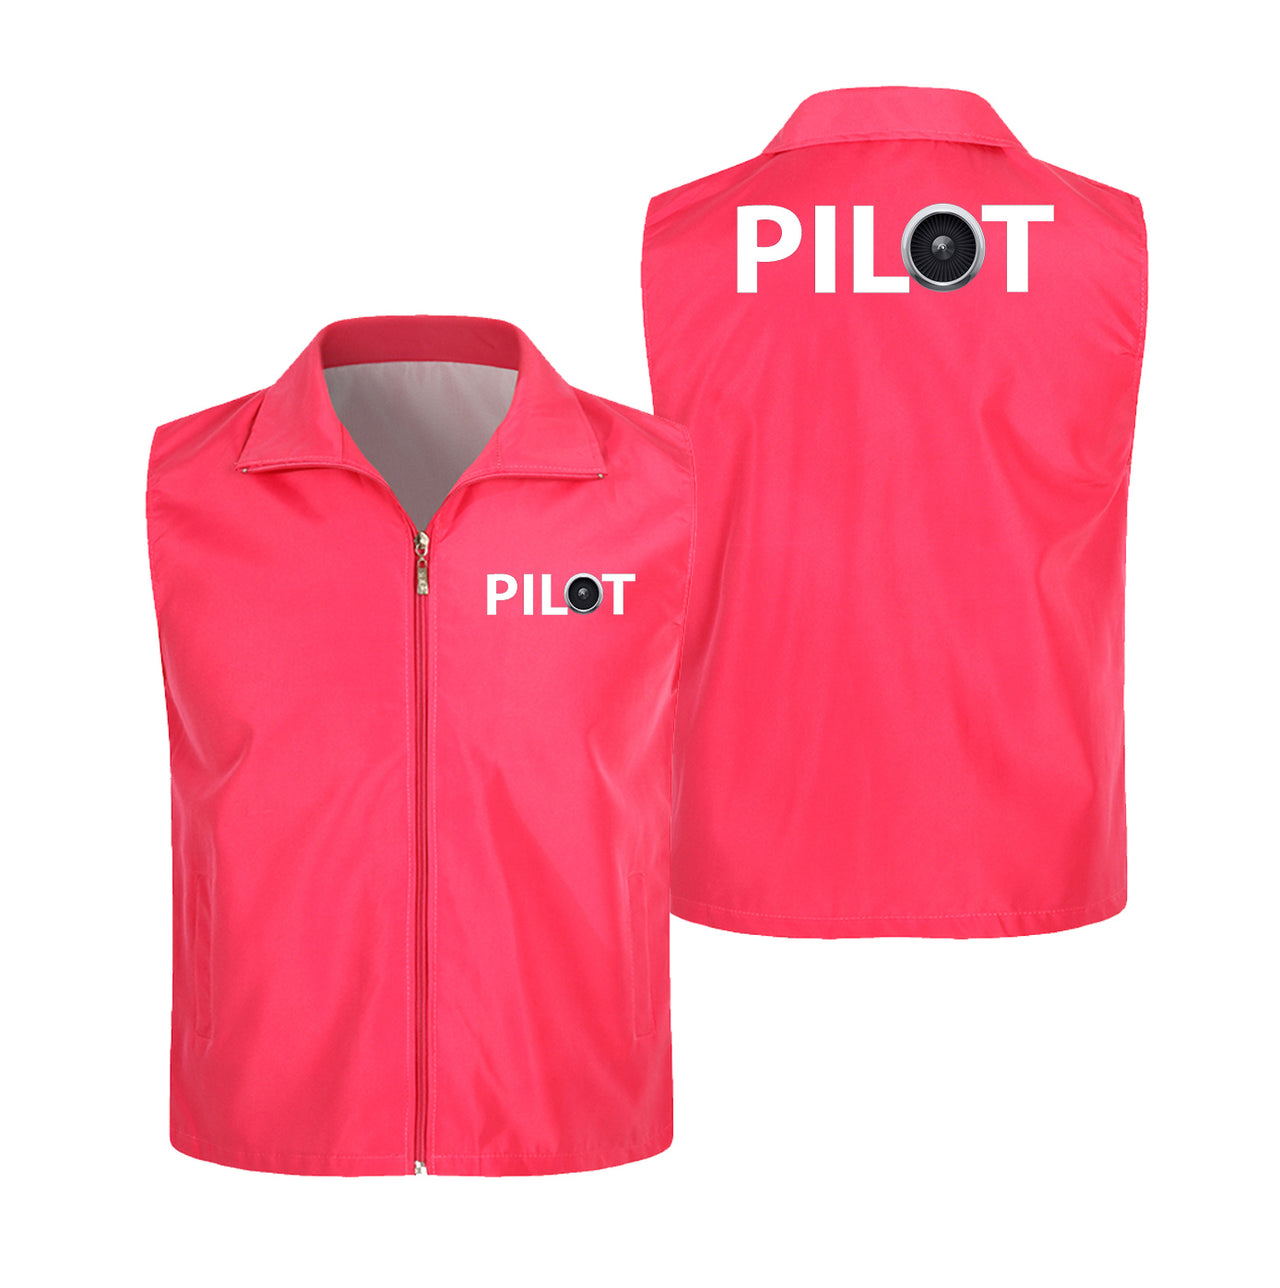 Pilot & Jet Engine Designed Thin Style Vests